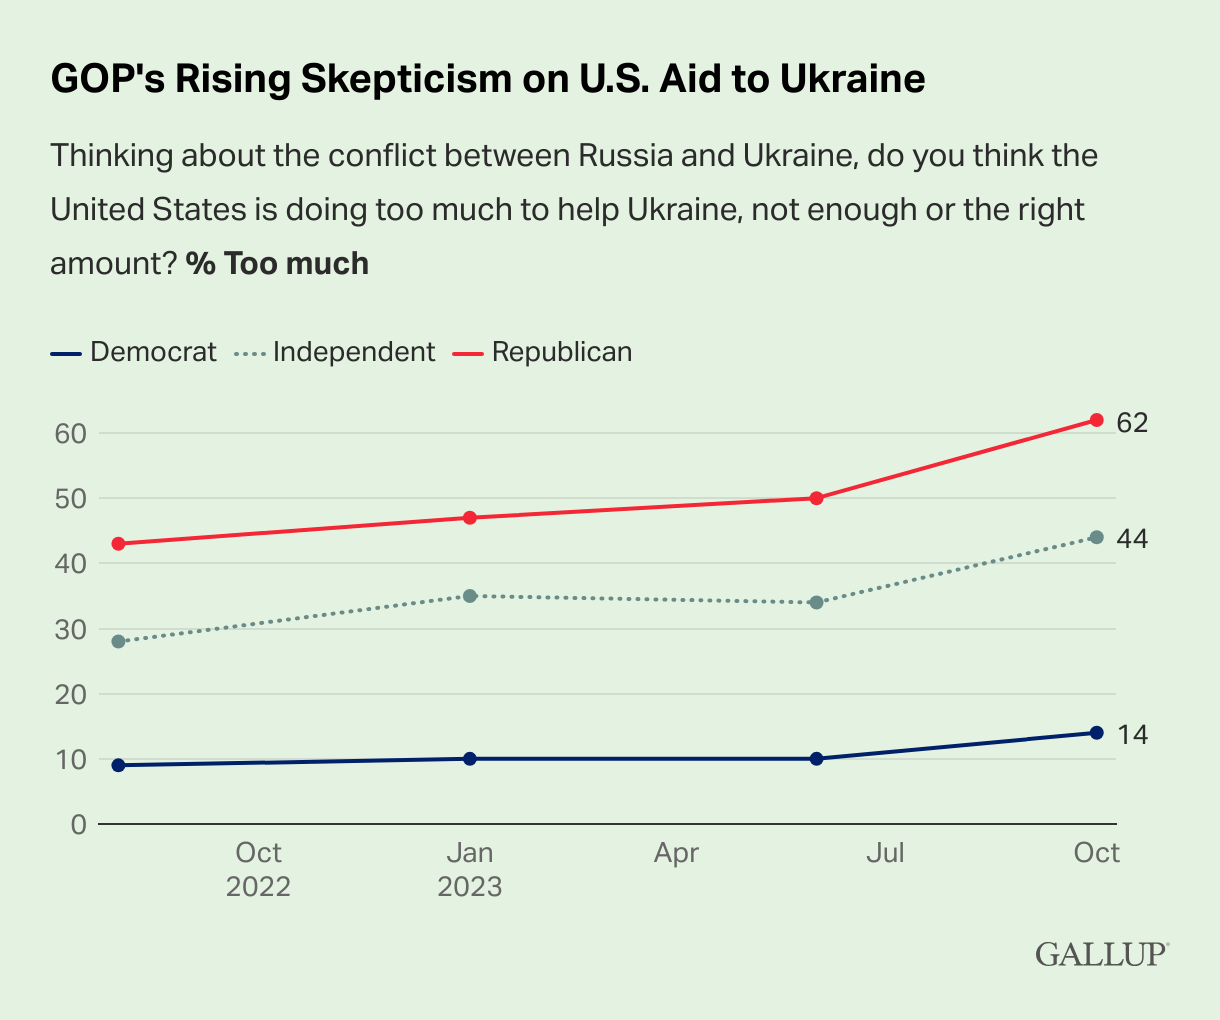 gop-s-rising-skepticism-on-u.s.-aid-to-ukraine.png 우크라이나 전쟁 회의론과 피로감이 확산된 미국